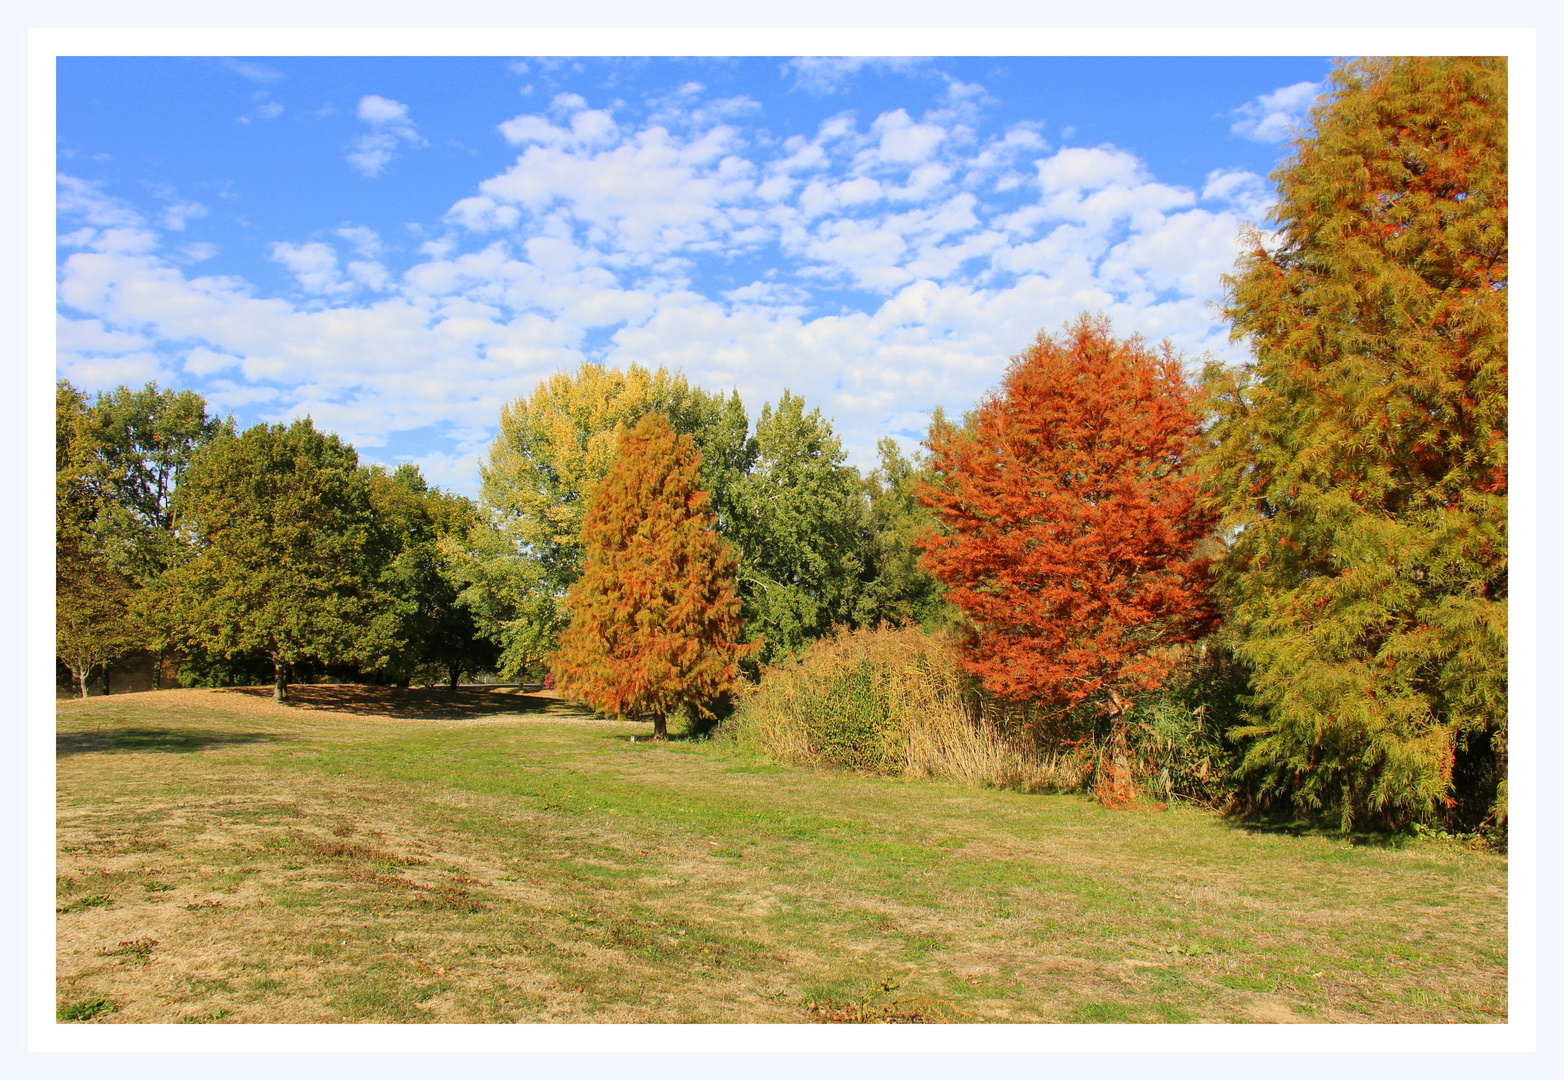  Herbstlich geschmückte Bäume im Park